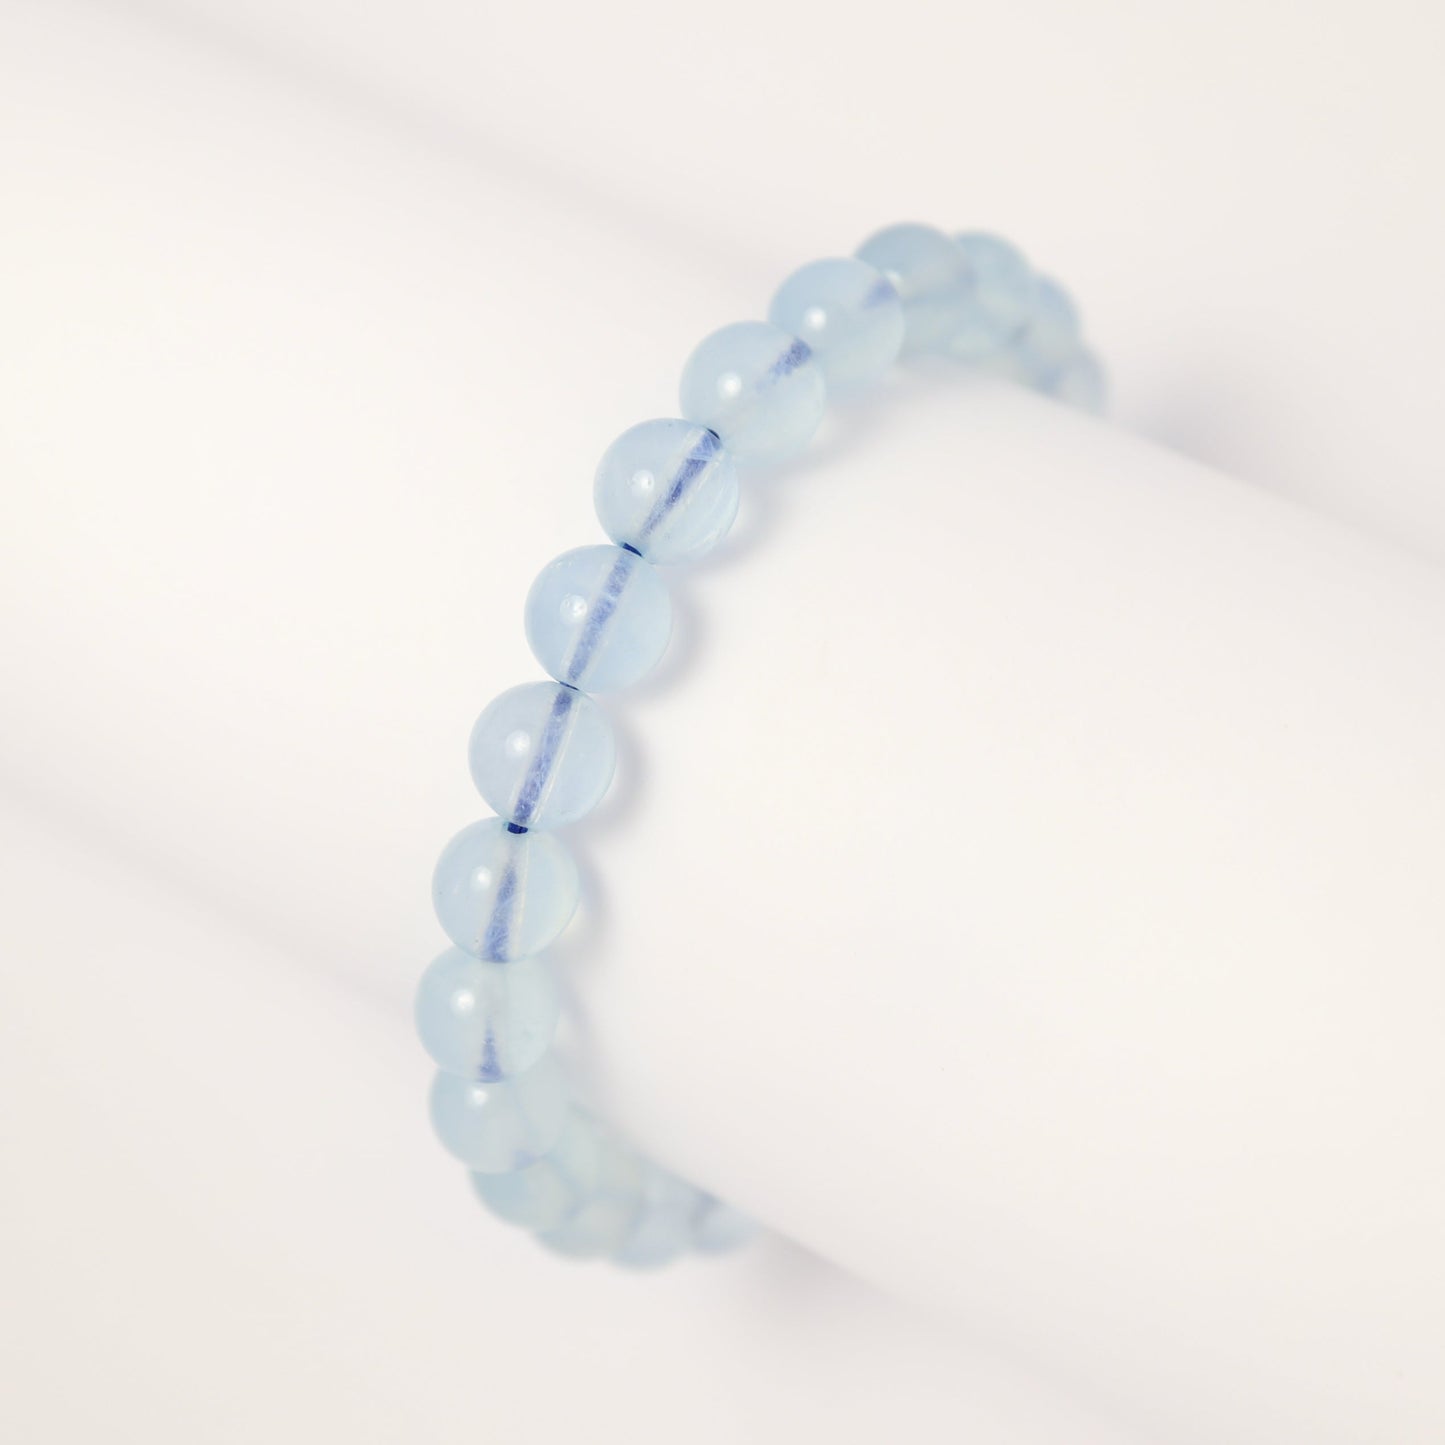 Frozen Blue - Ice Aquamarine Bracelet (8mm)